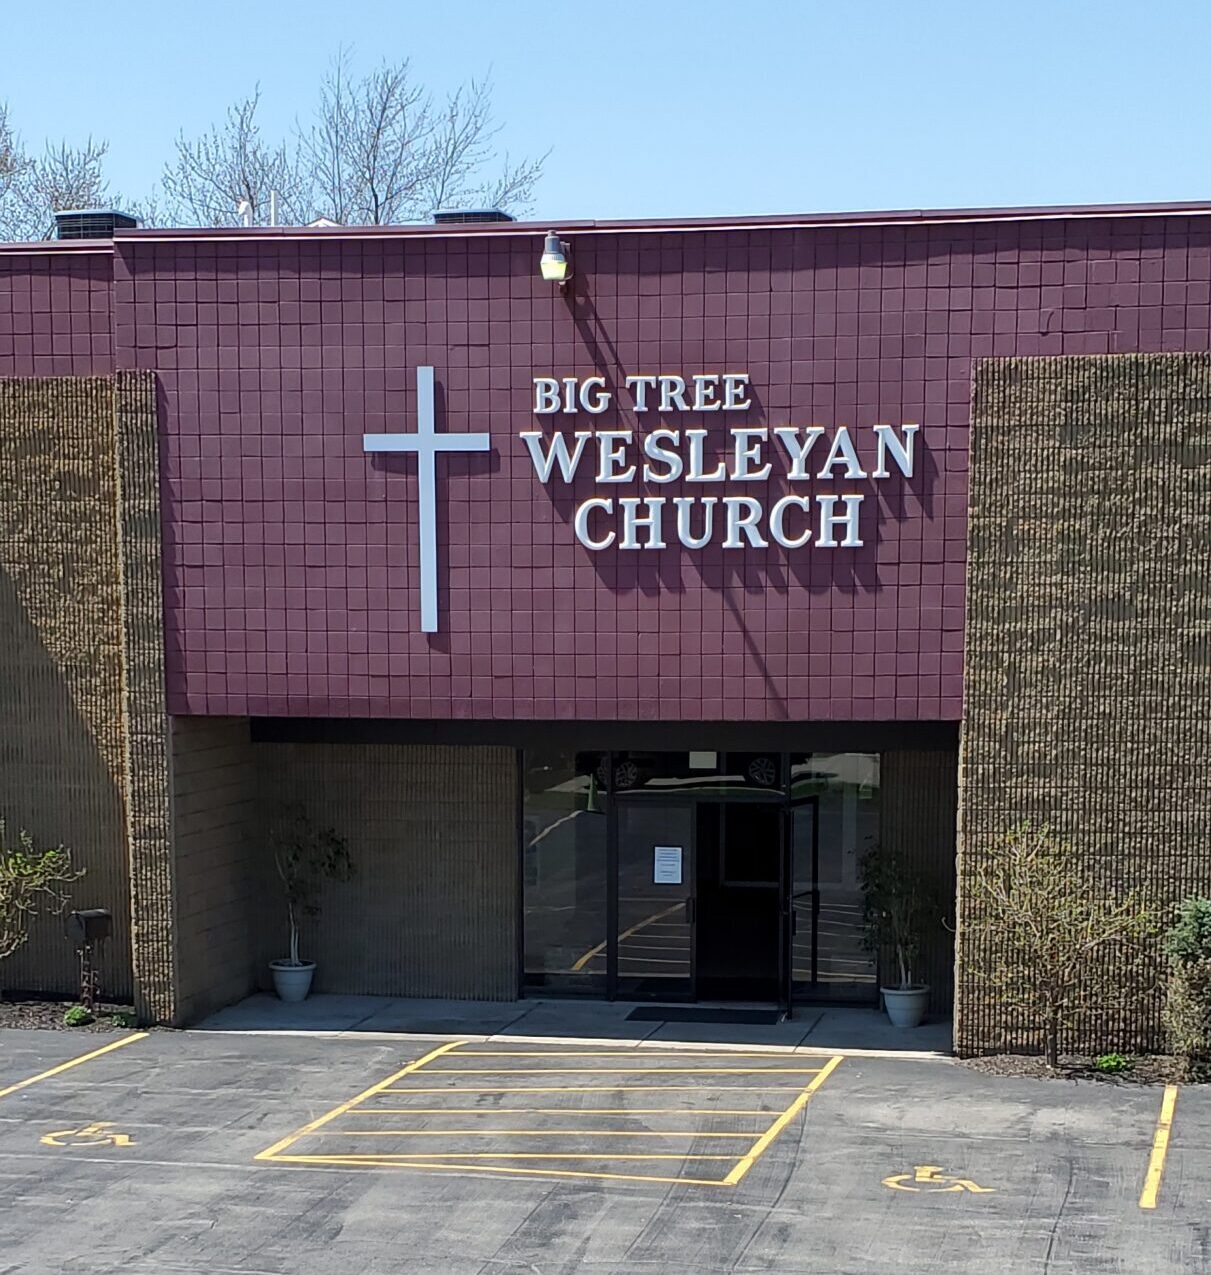 We see you” - The Wesleyan Church